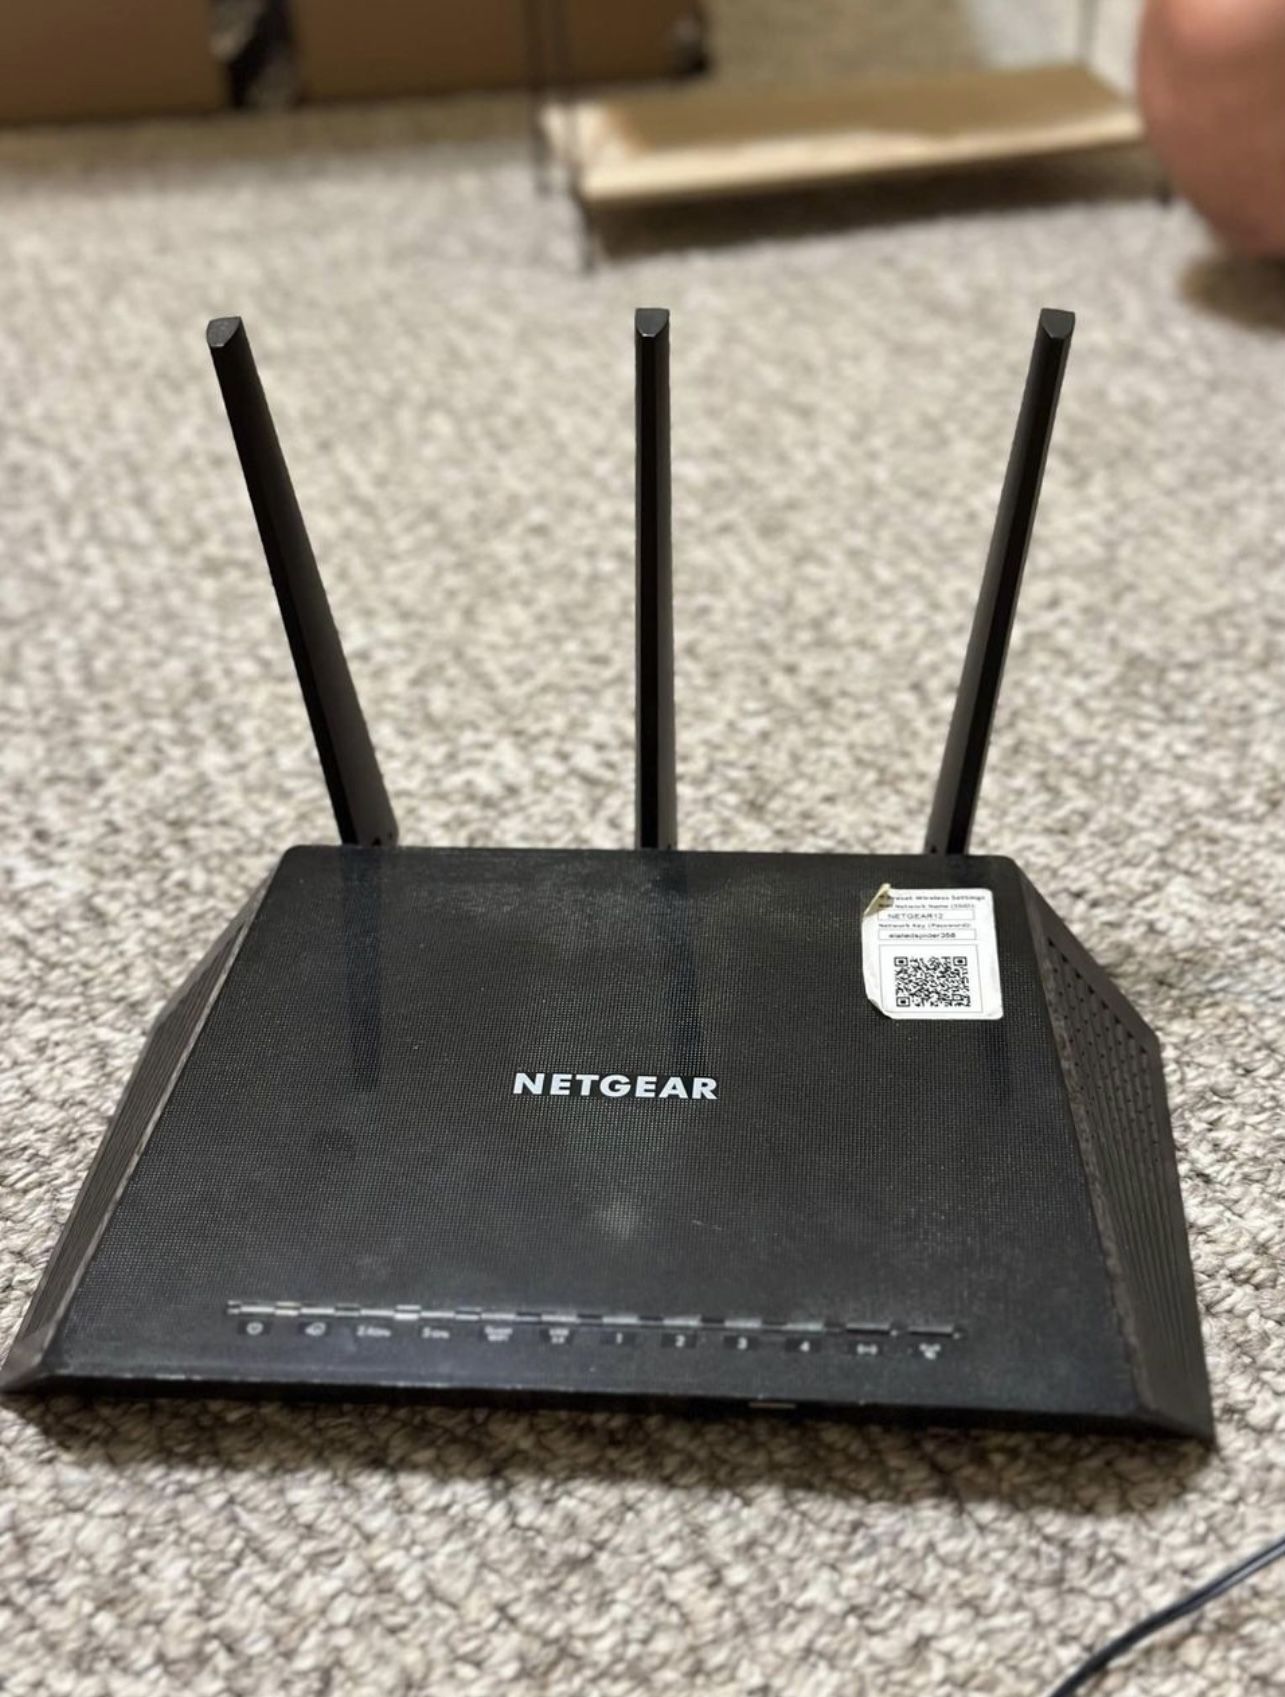 NETGEAR - Nighthawk AC2600 WiFi Router